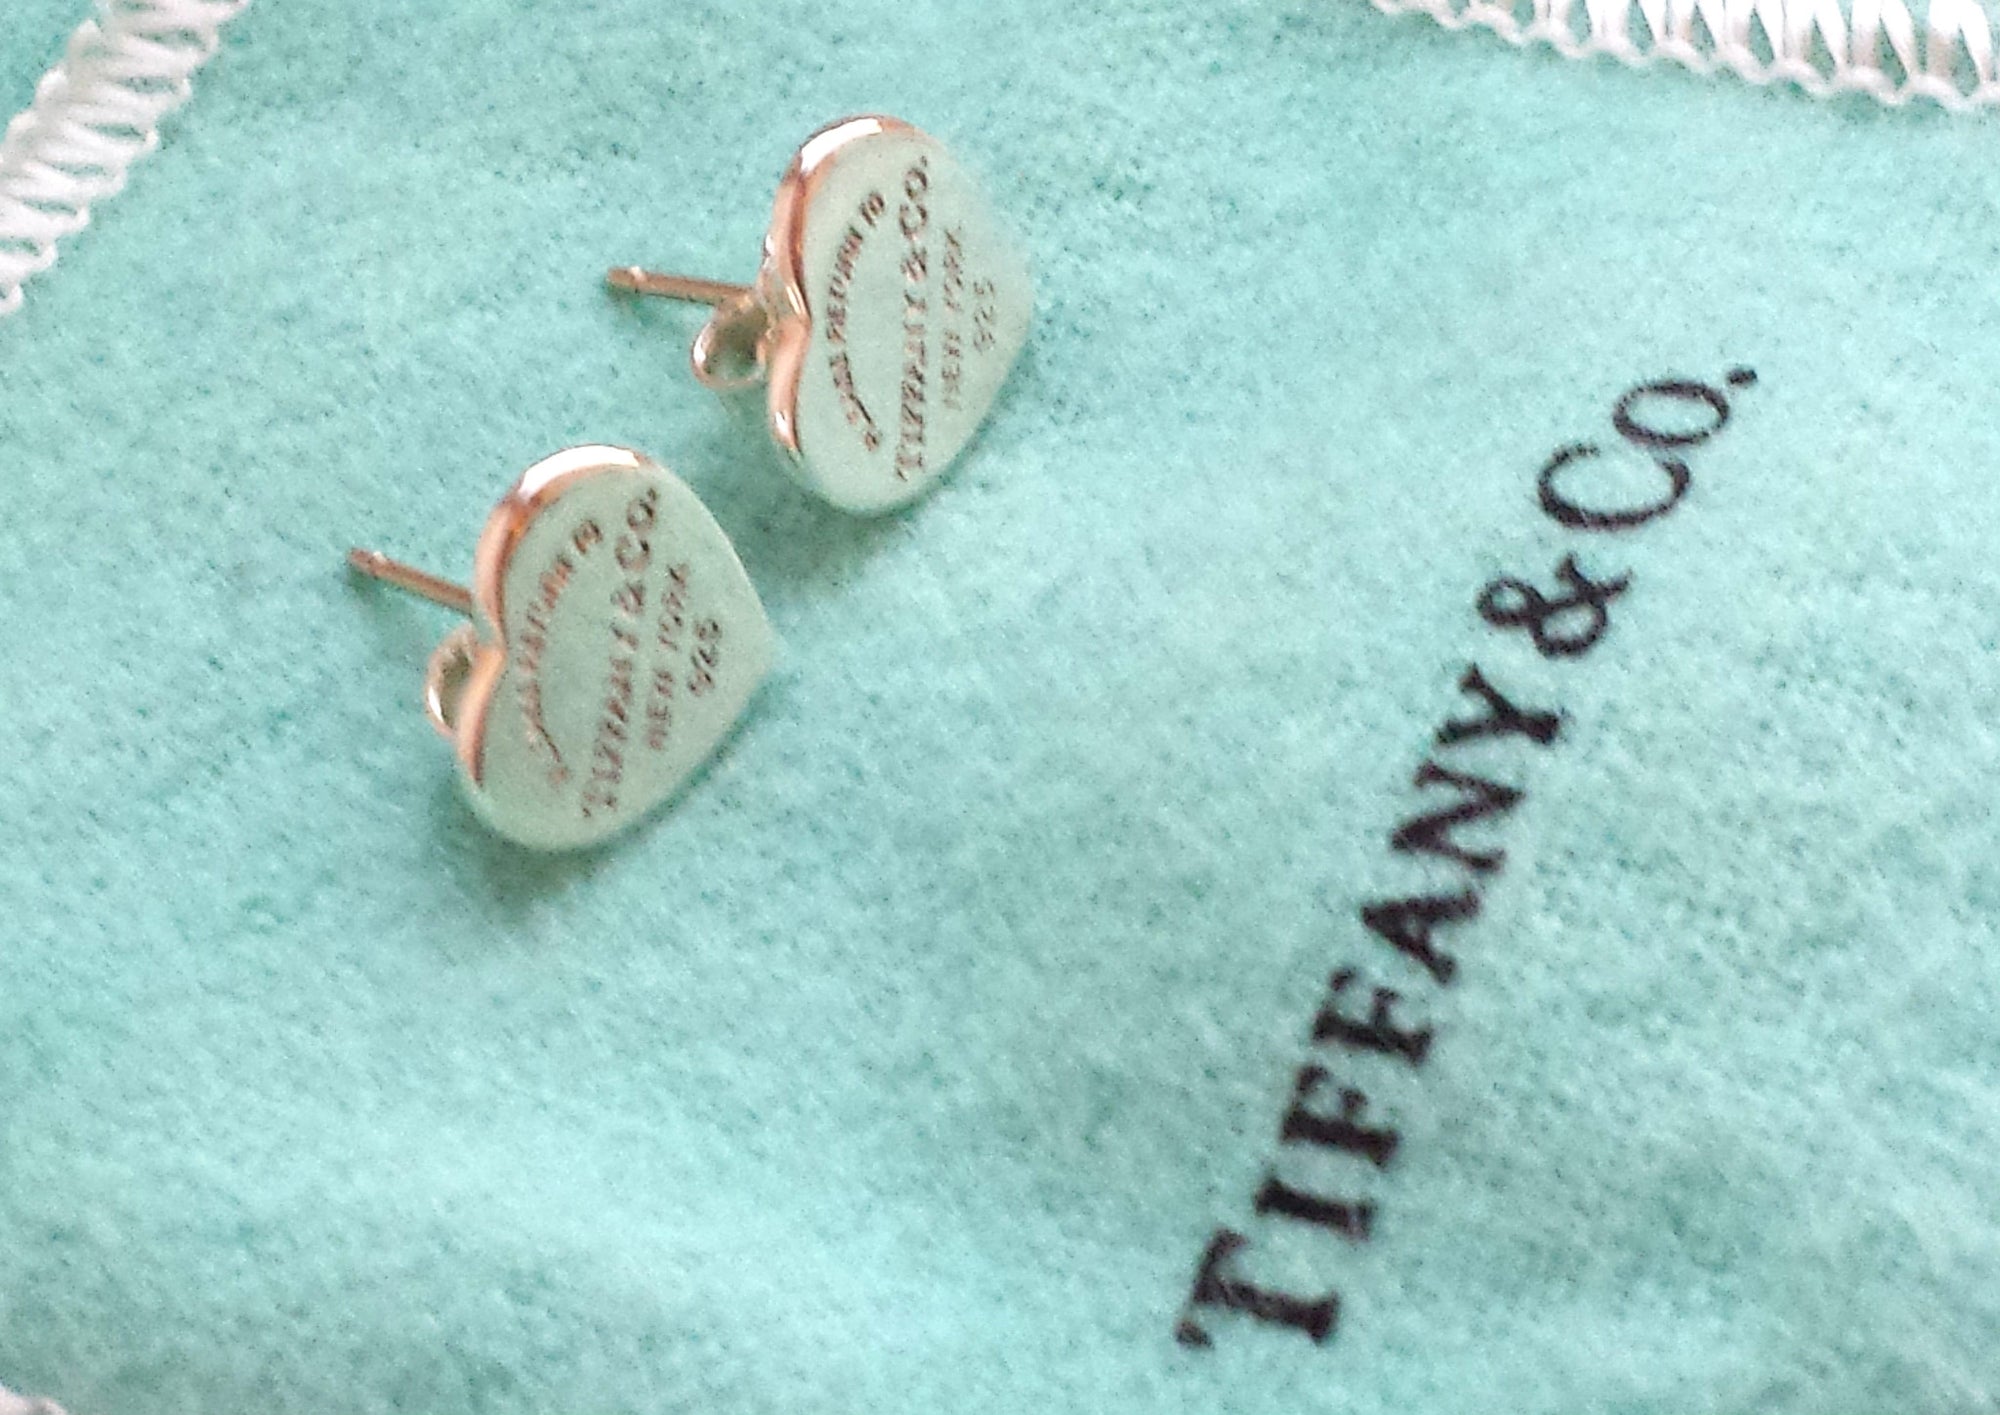 Tiffany & Co. 'Please Return To' Earrings in Sterling Silver – Small